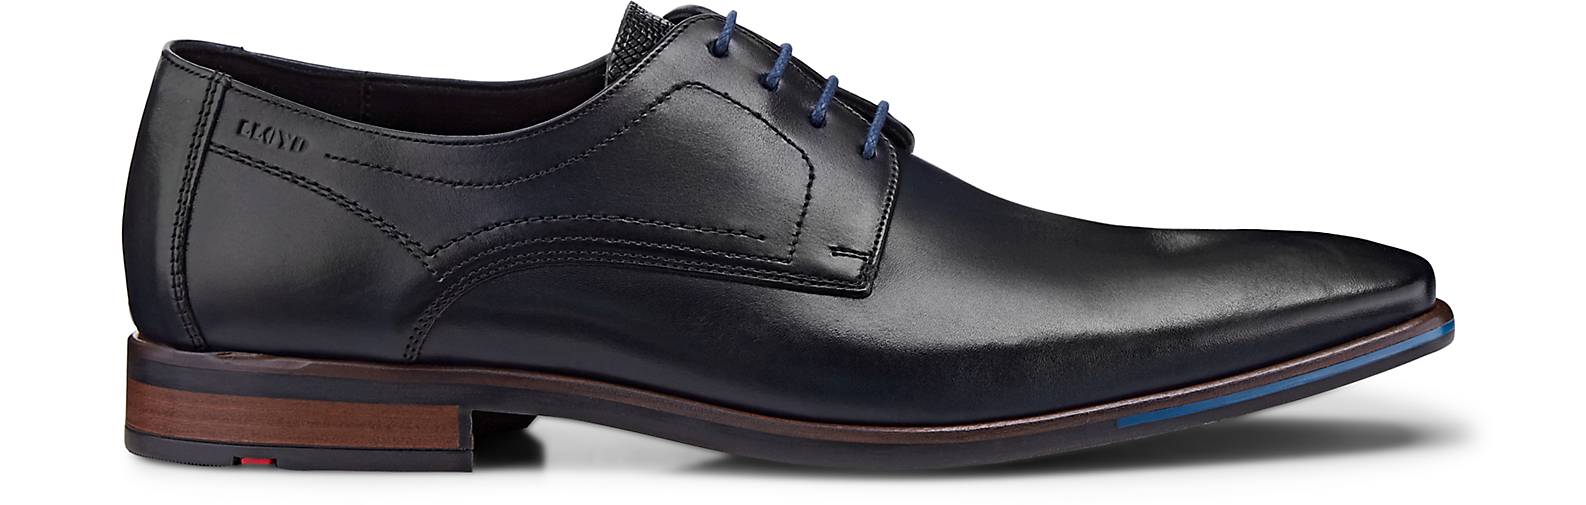 Lloyd Herrenschuhe Schnürschuhe Business  Anzug Schuhe schwarz REDUZIERT 